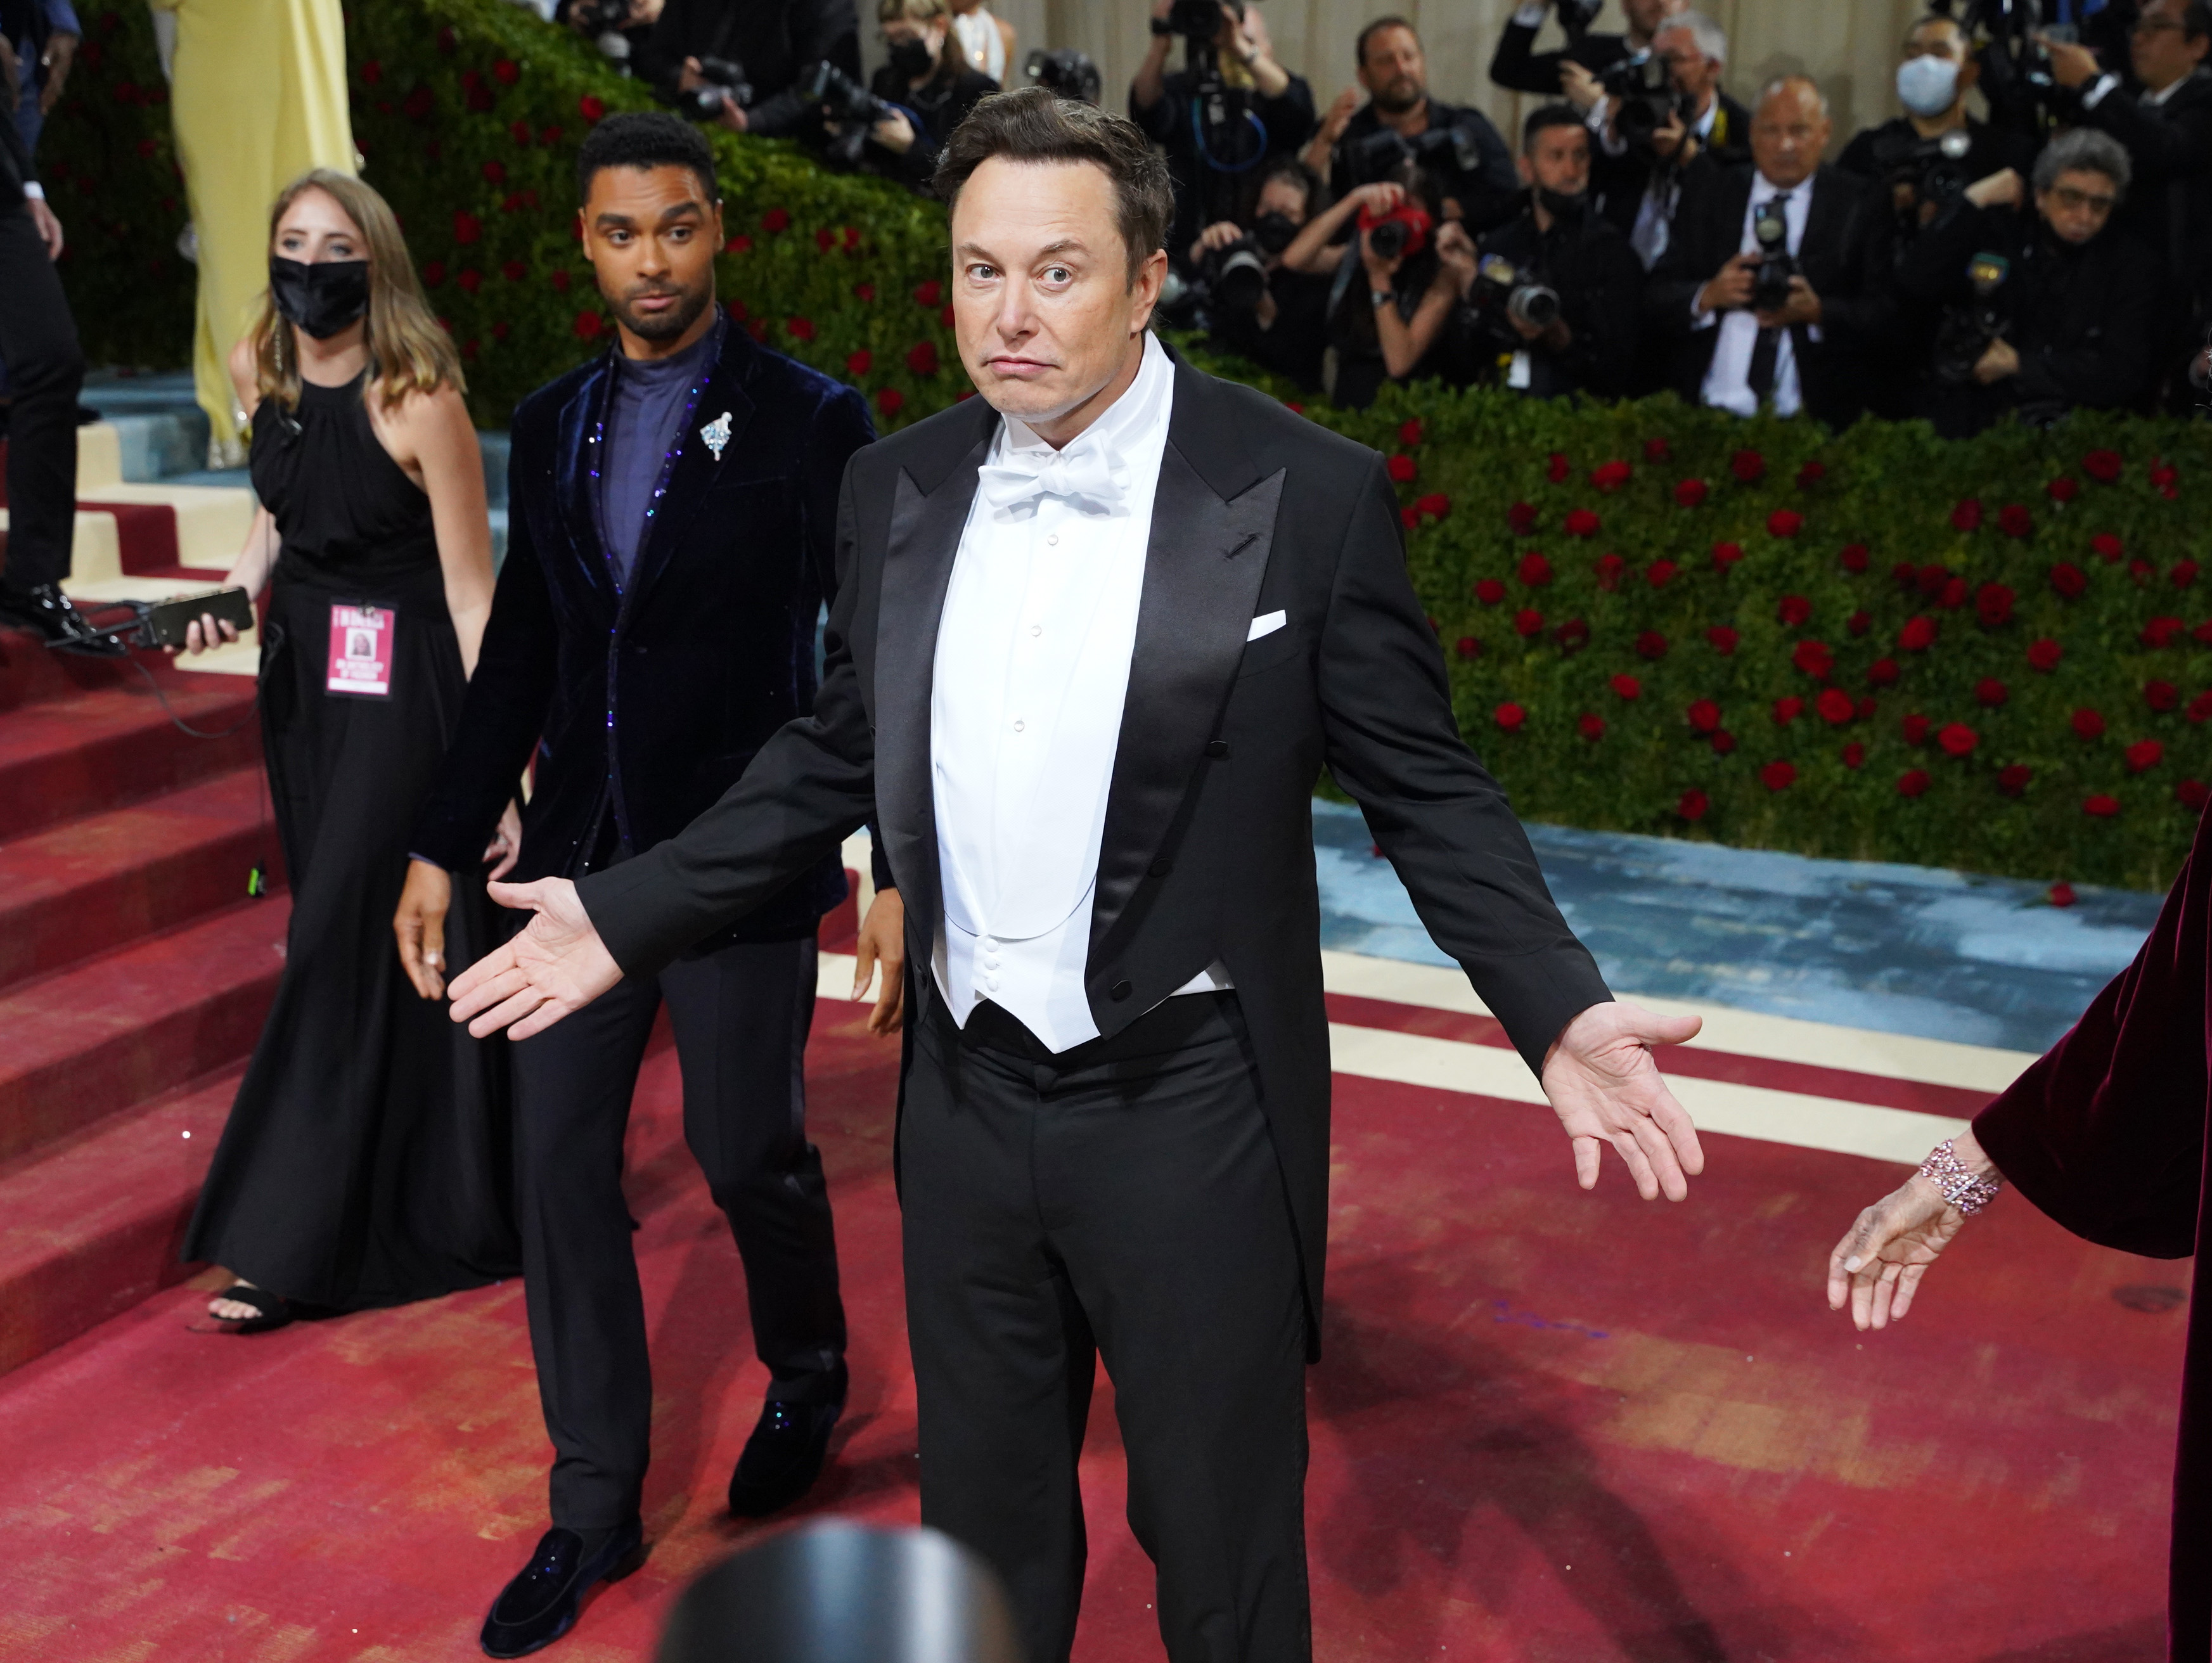 Elon Musk on a red carpet wearing a tuxedo.